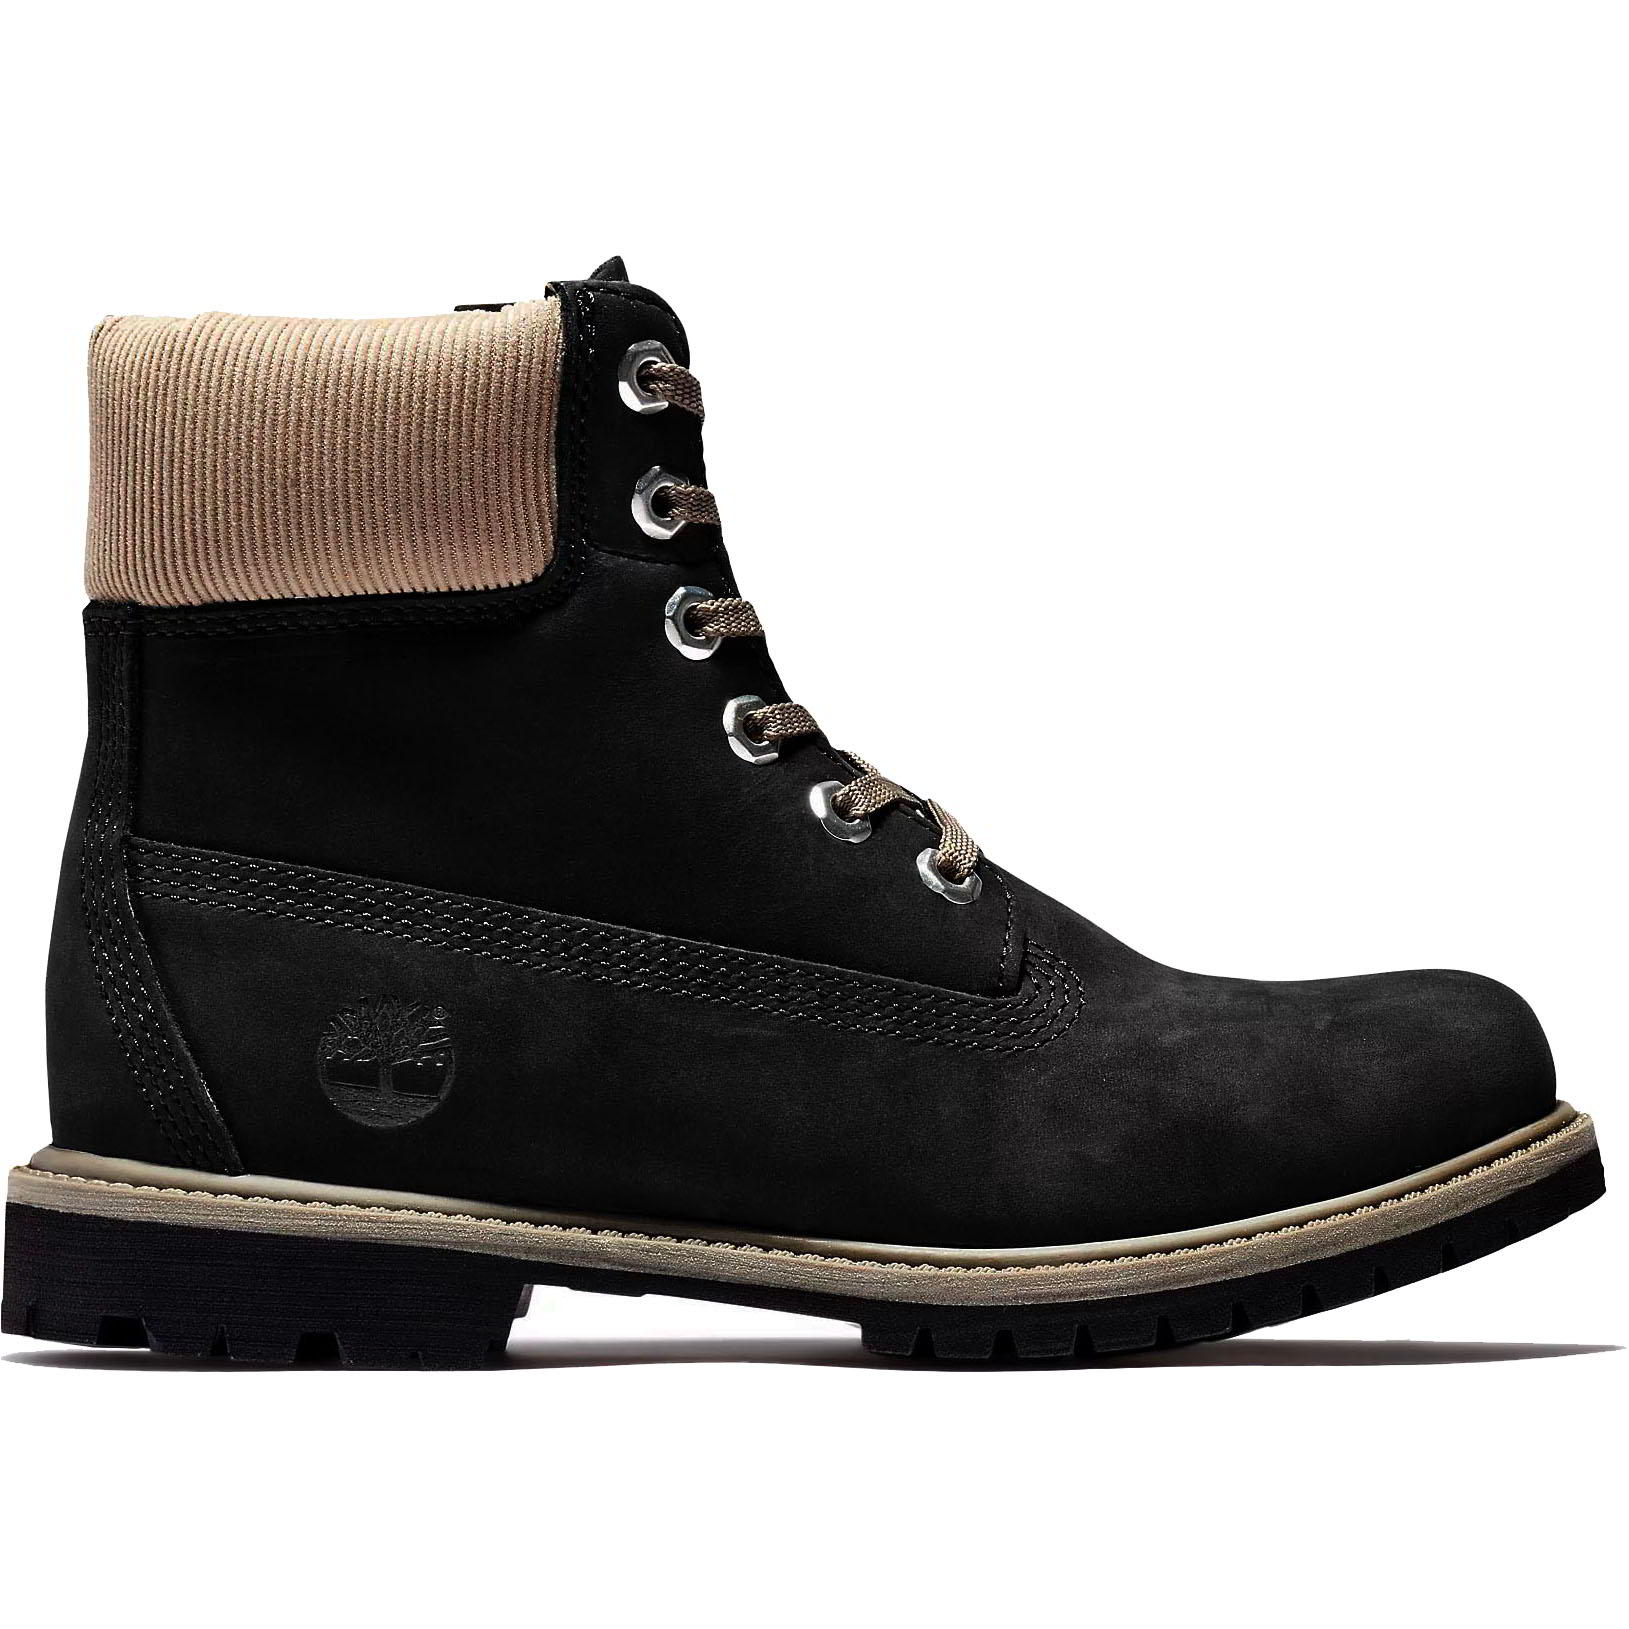 Timberland - Womens 6 Inch Premium Waterproof Ankle Boots UK 7.5 Black 2951